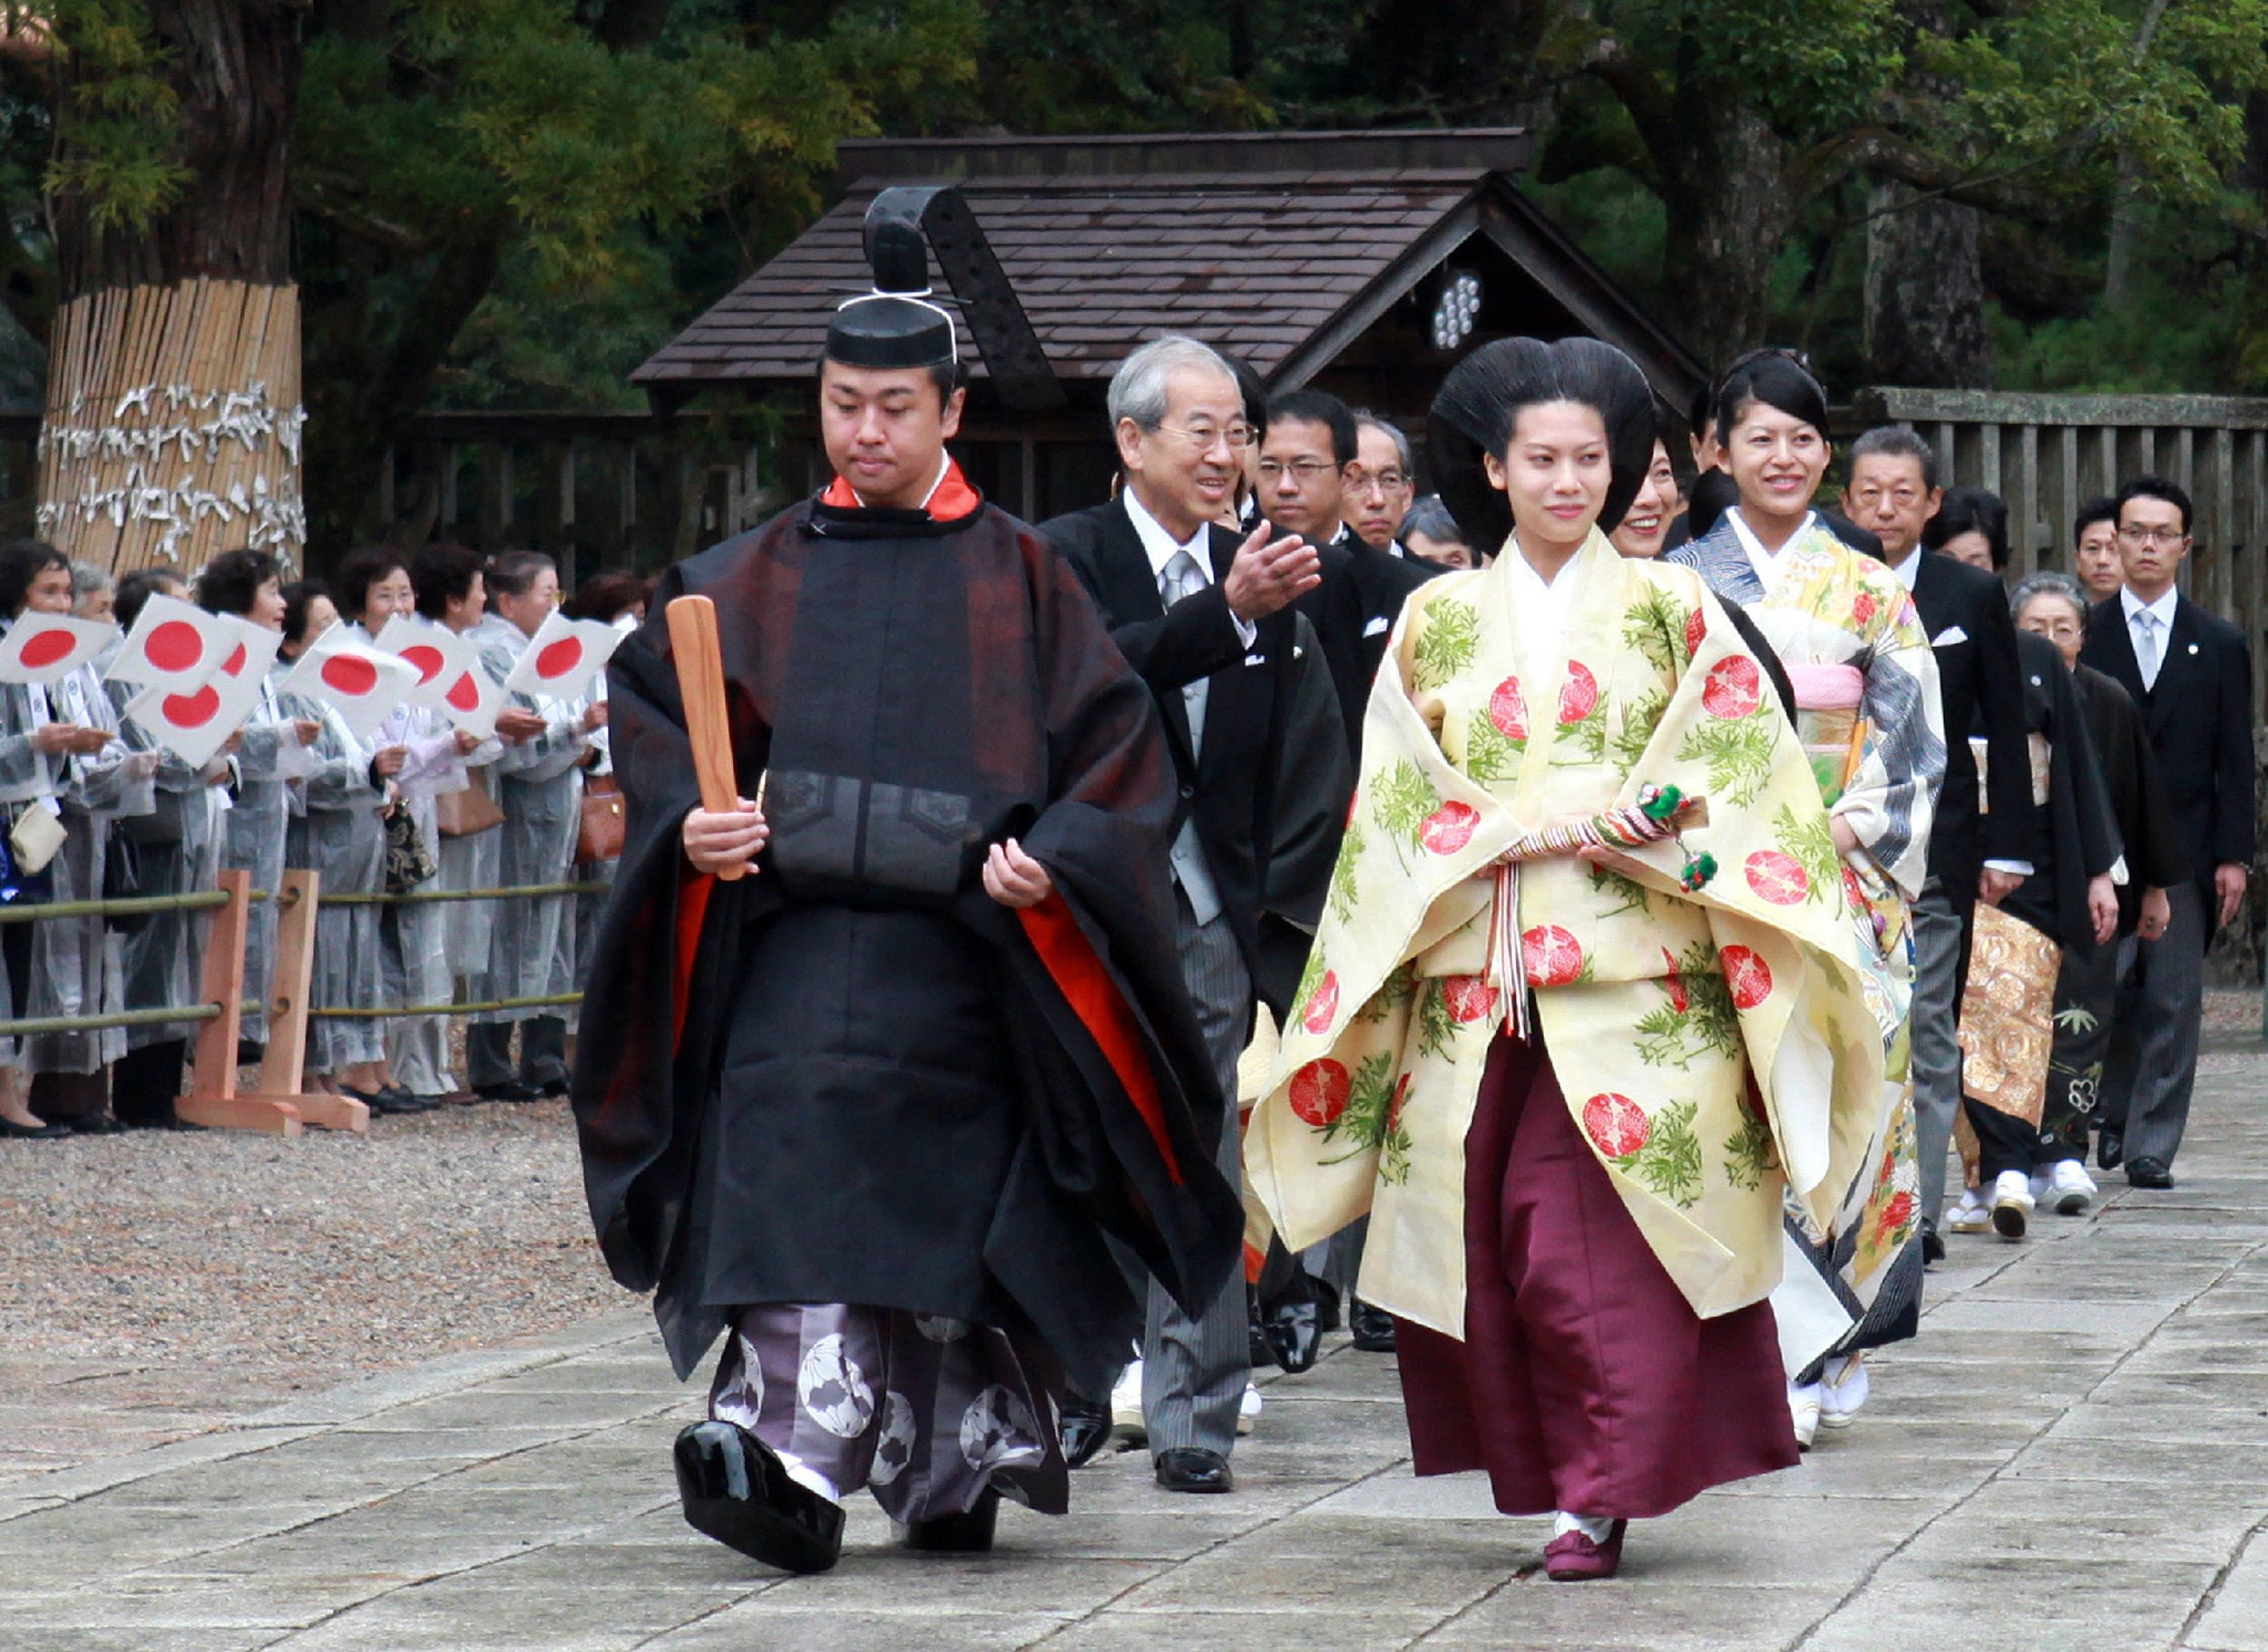 ancient japanese wedding dress